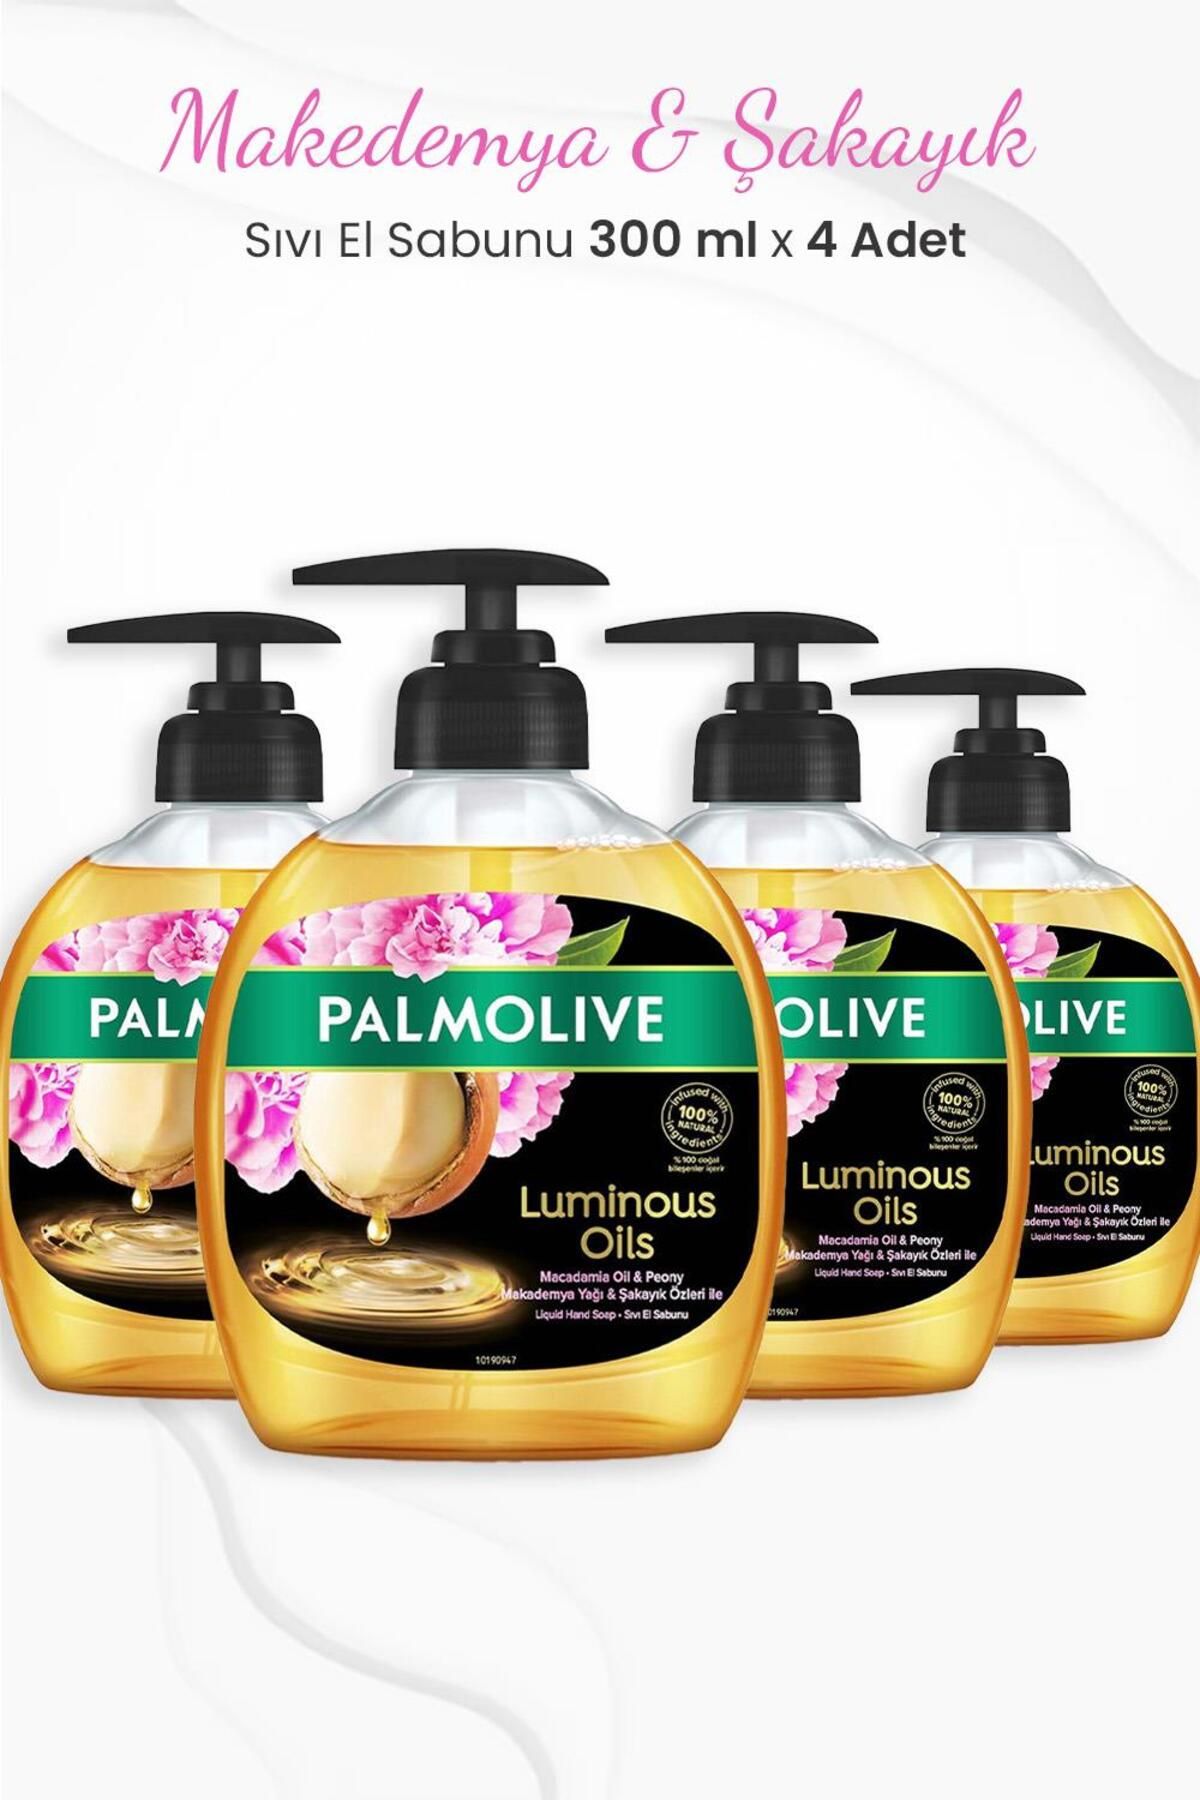 Palmolive Luminous Oils Makedemya & Şakayık Sıvı Sabun 300 ml x 4 Adet